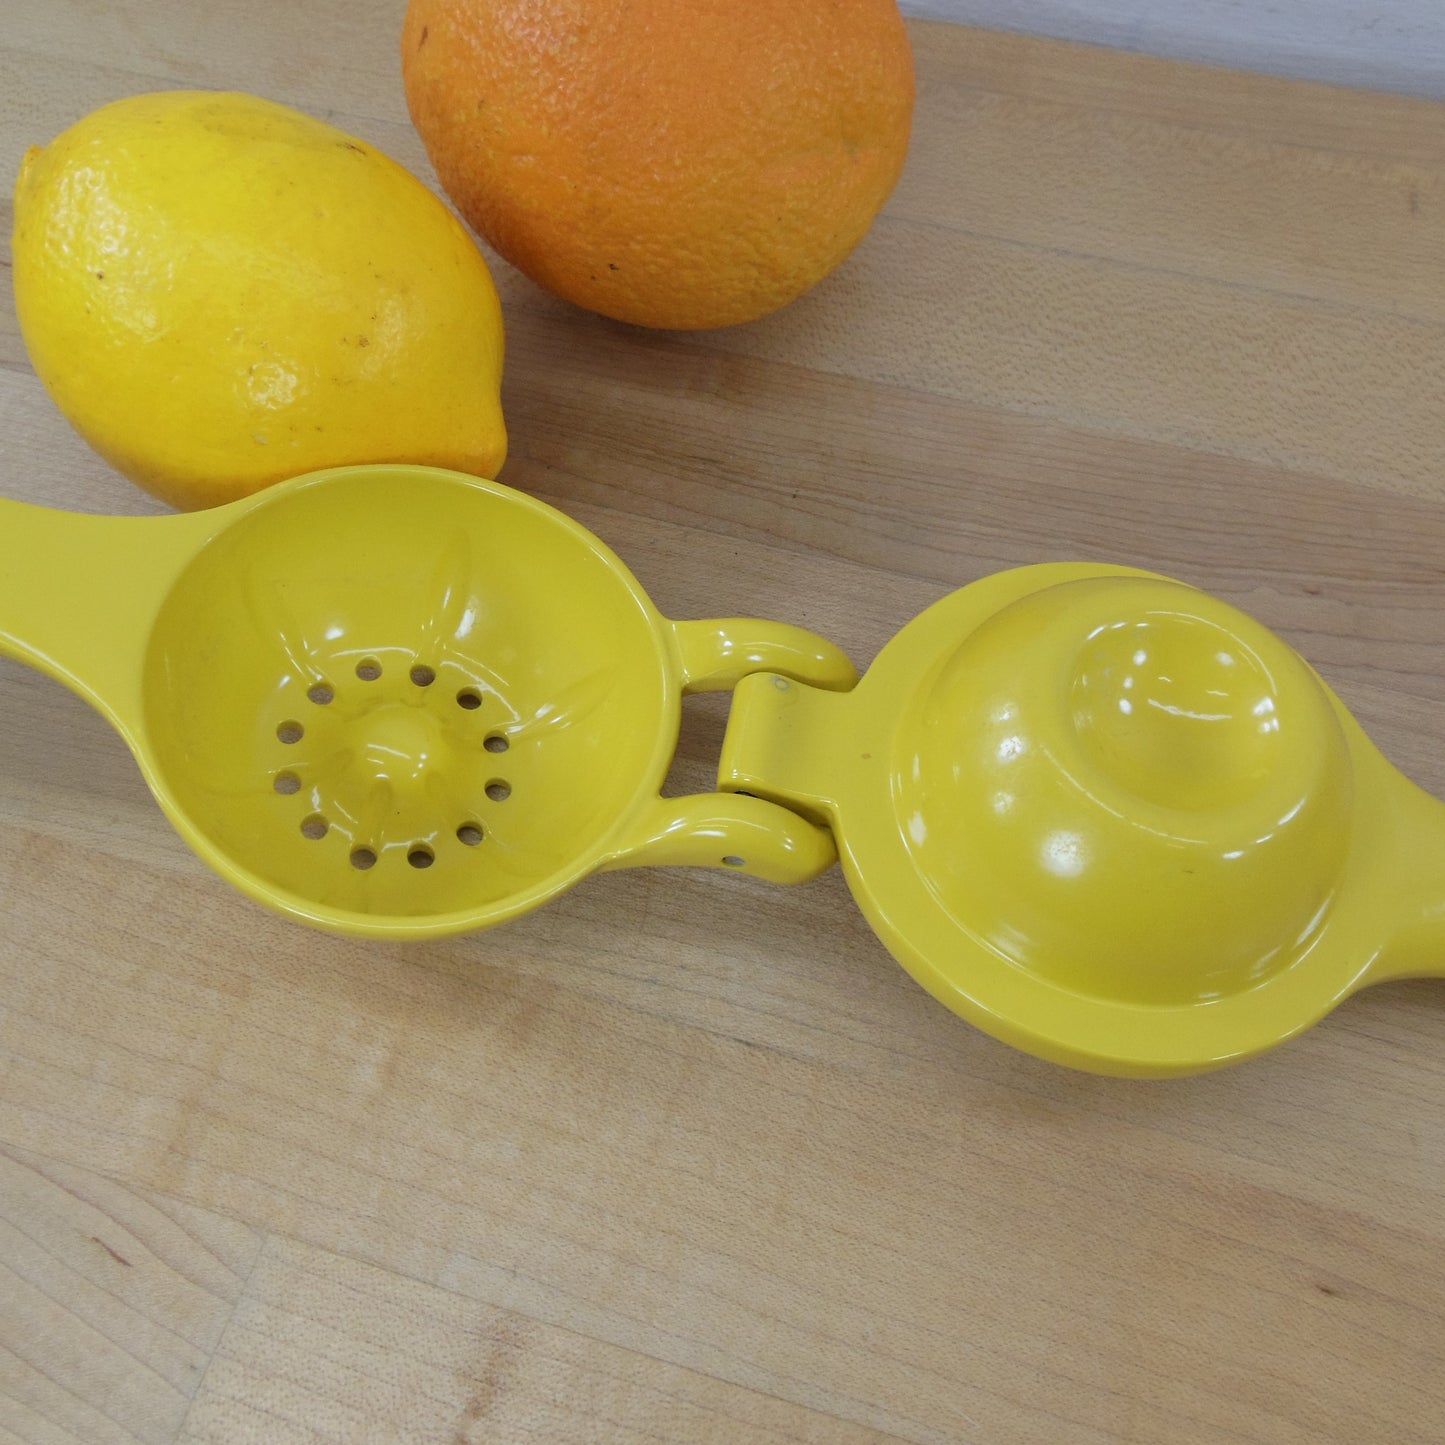 OXO Good Grips Yellow Lemon Citrus Hand Squeezer Juicer Used